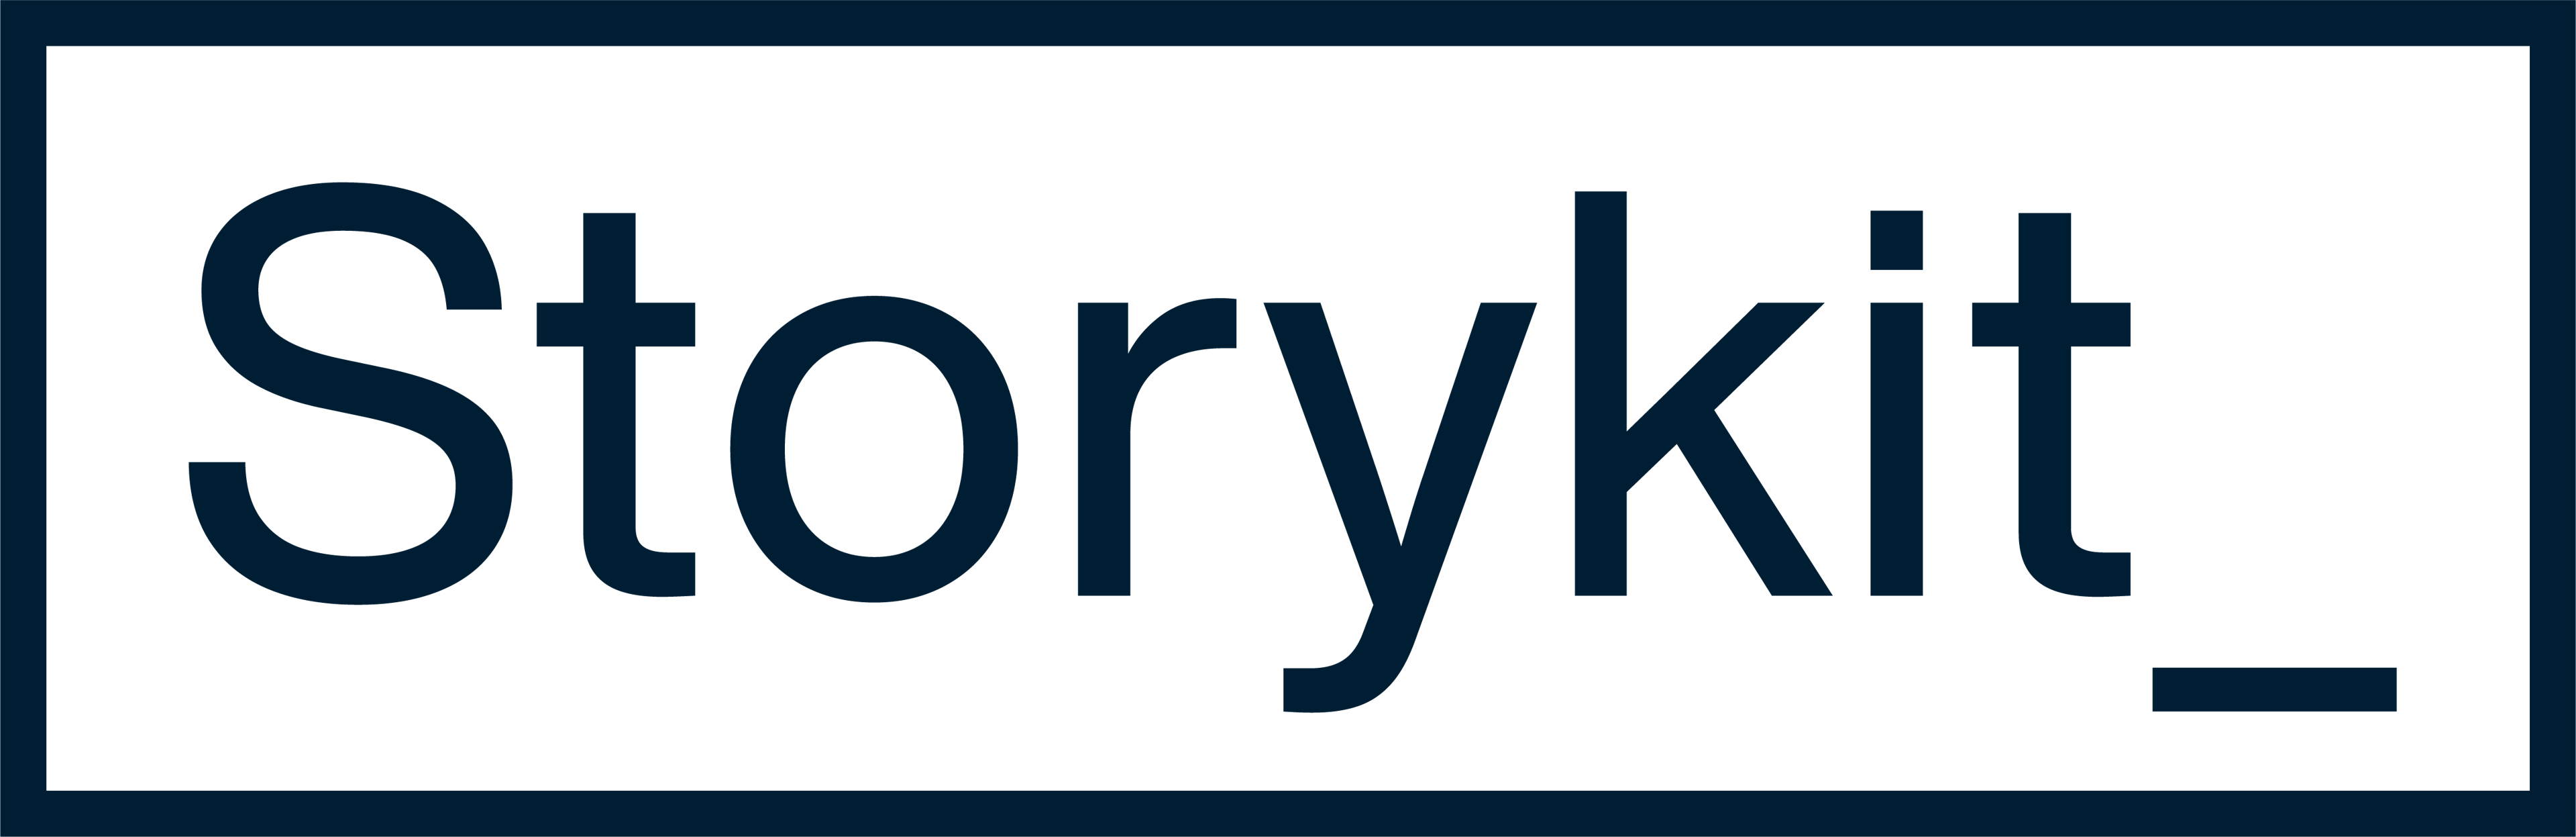 Storykit Logo